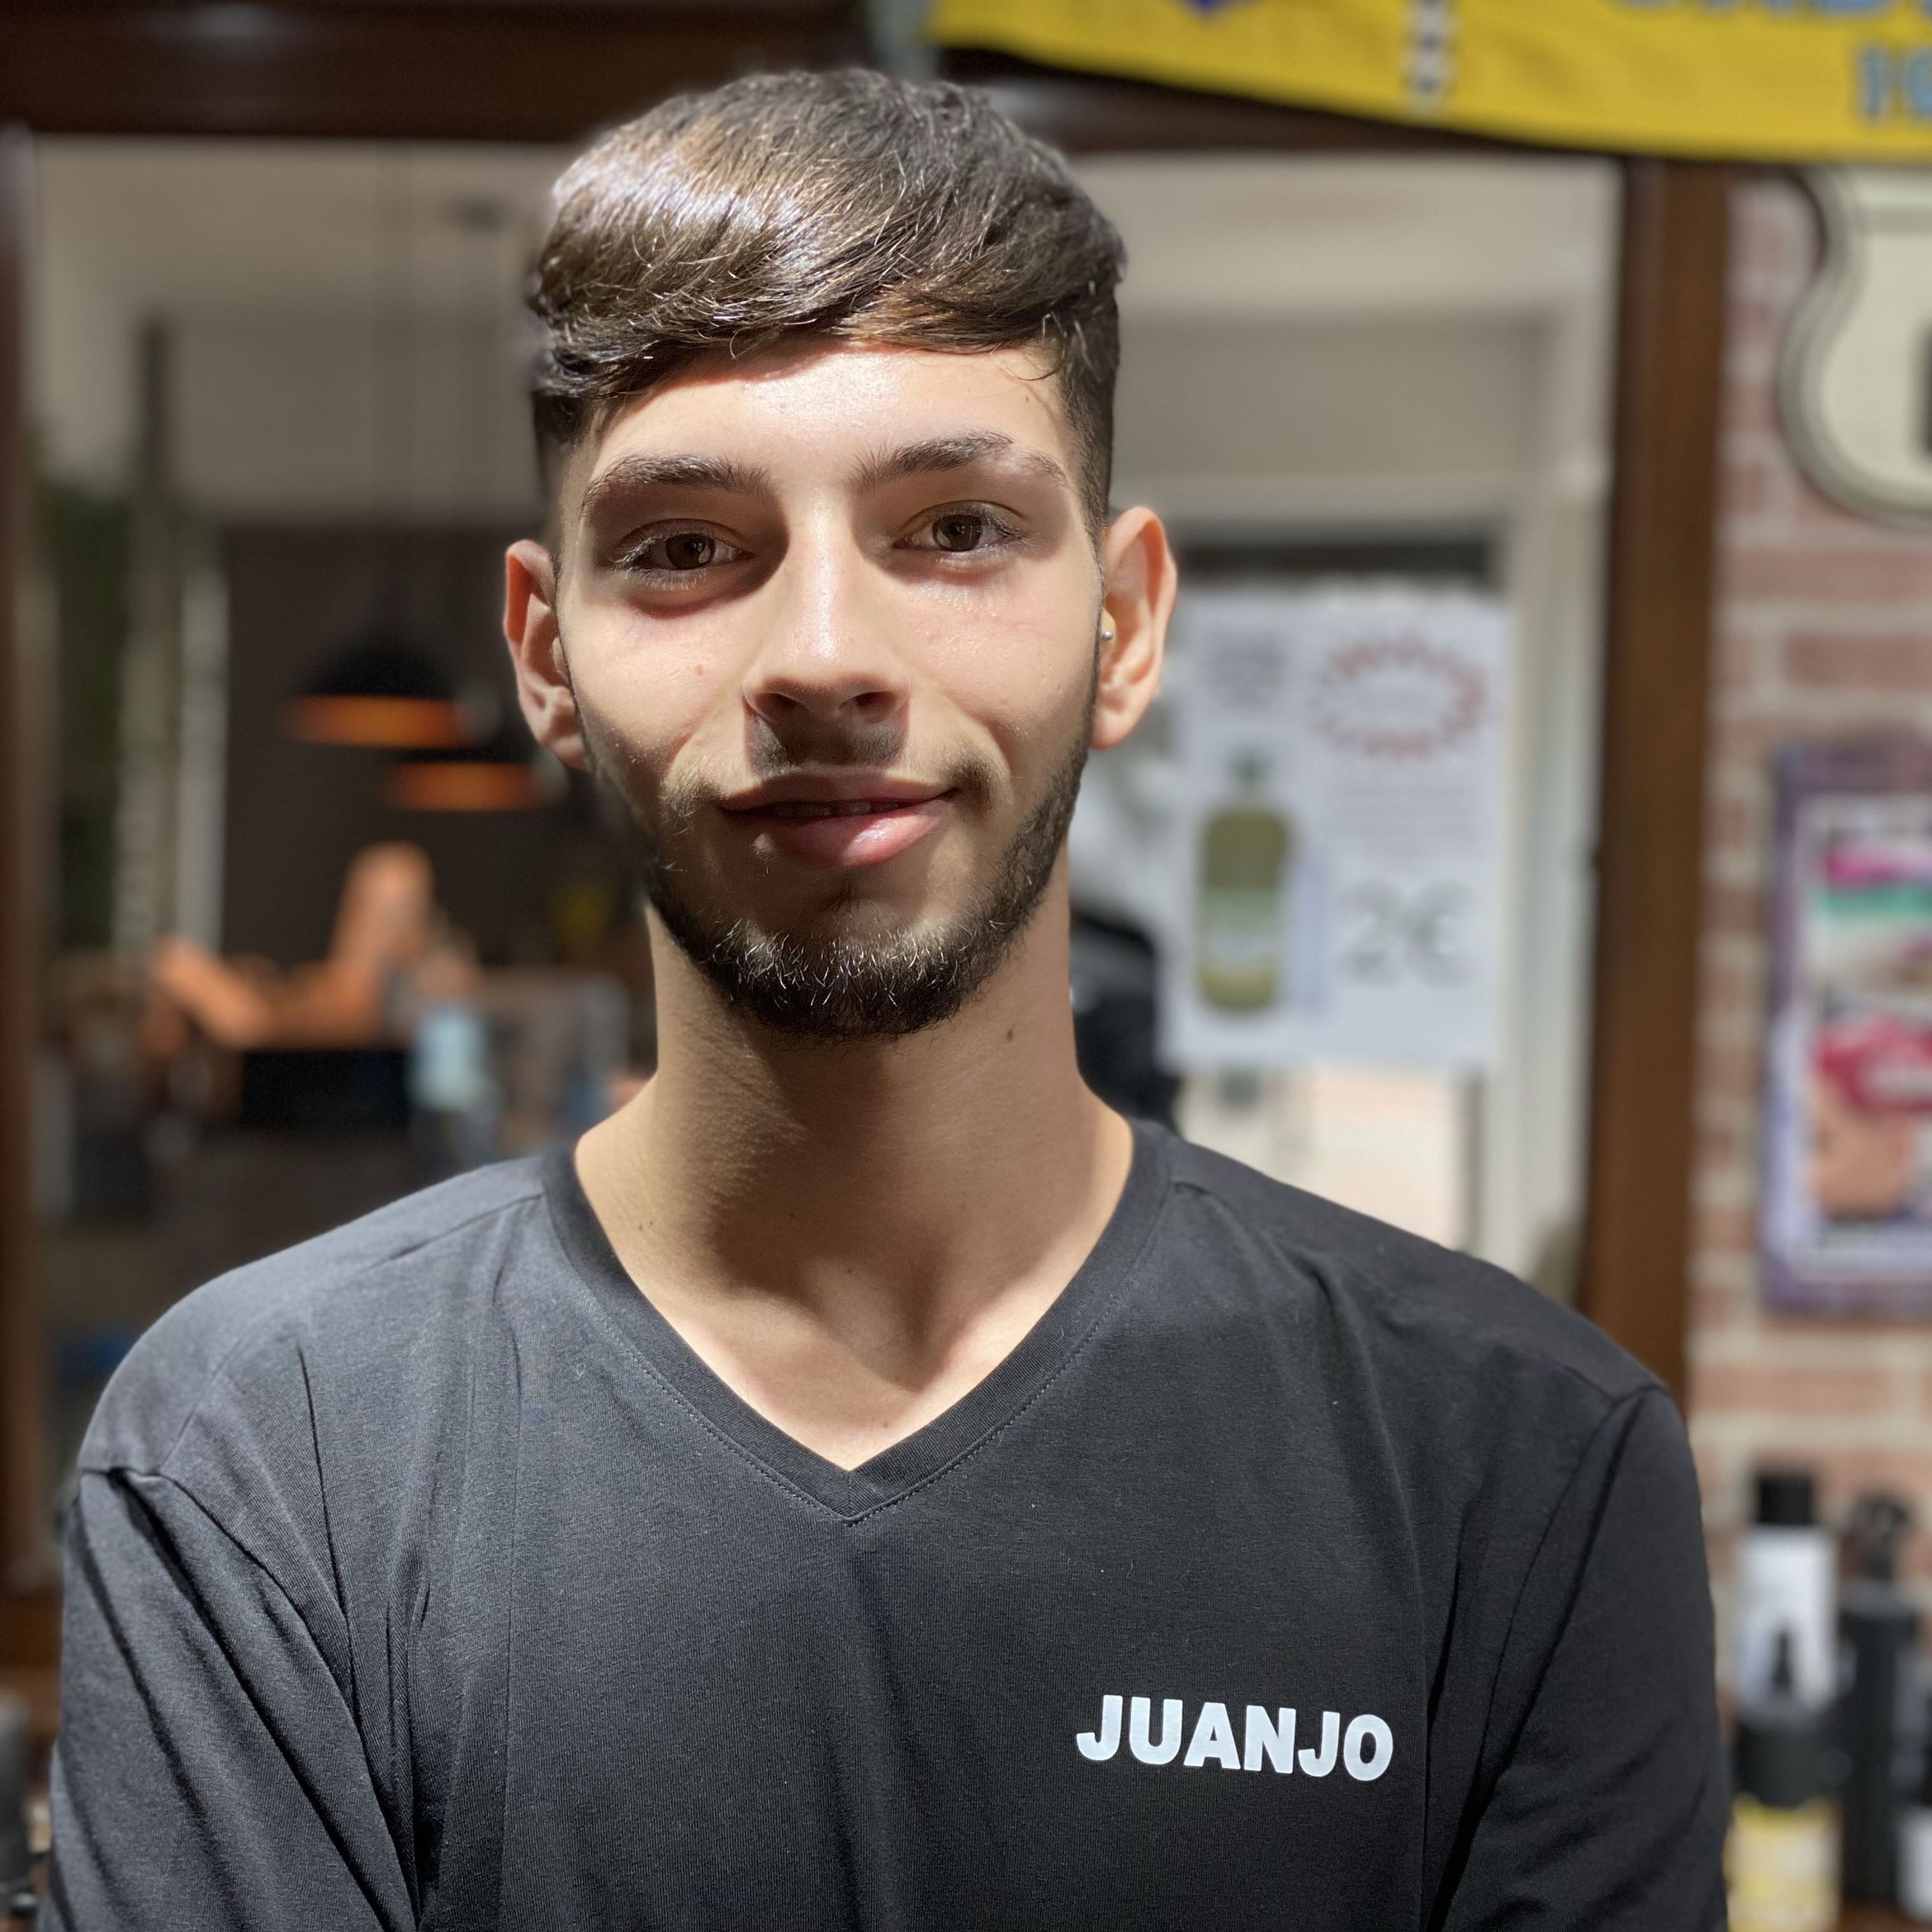 Juanjo - Barber Shop Wicket